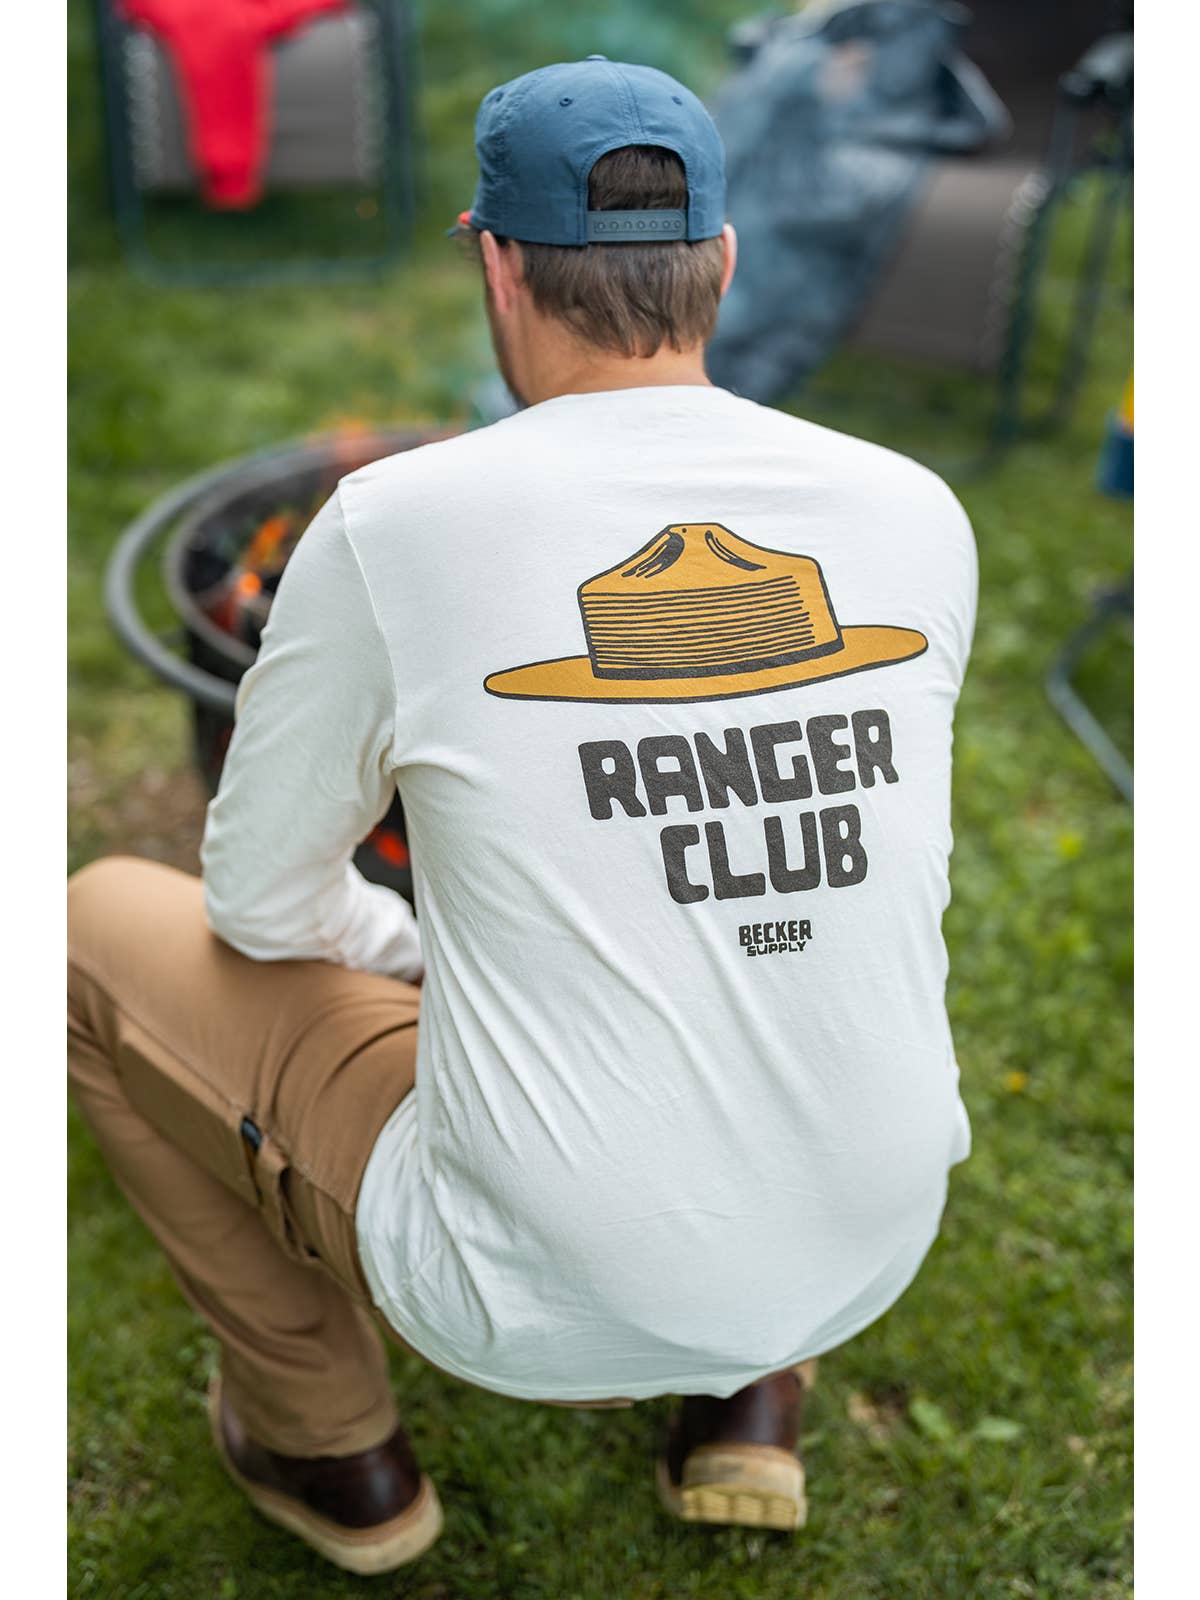 Ranger Club Longsleeve Tee - Storm and Sky Shoppe - Becker Supply Co